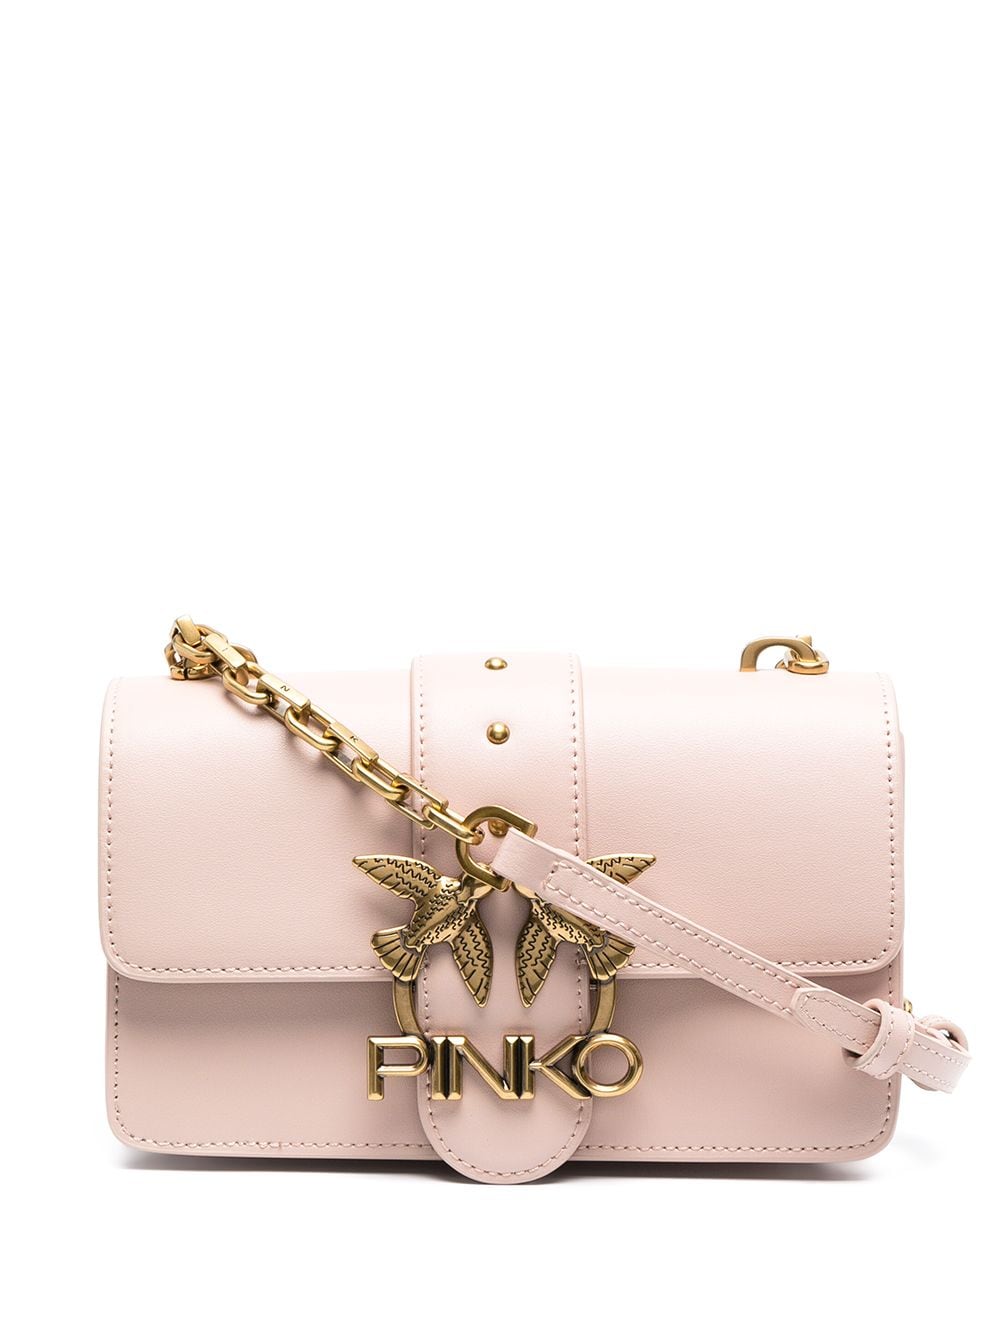 фото Pinko мини-сумка love icon